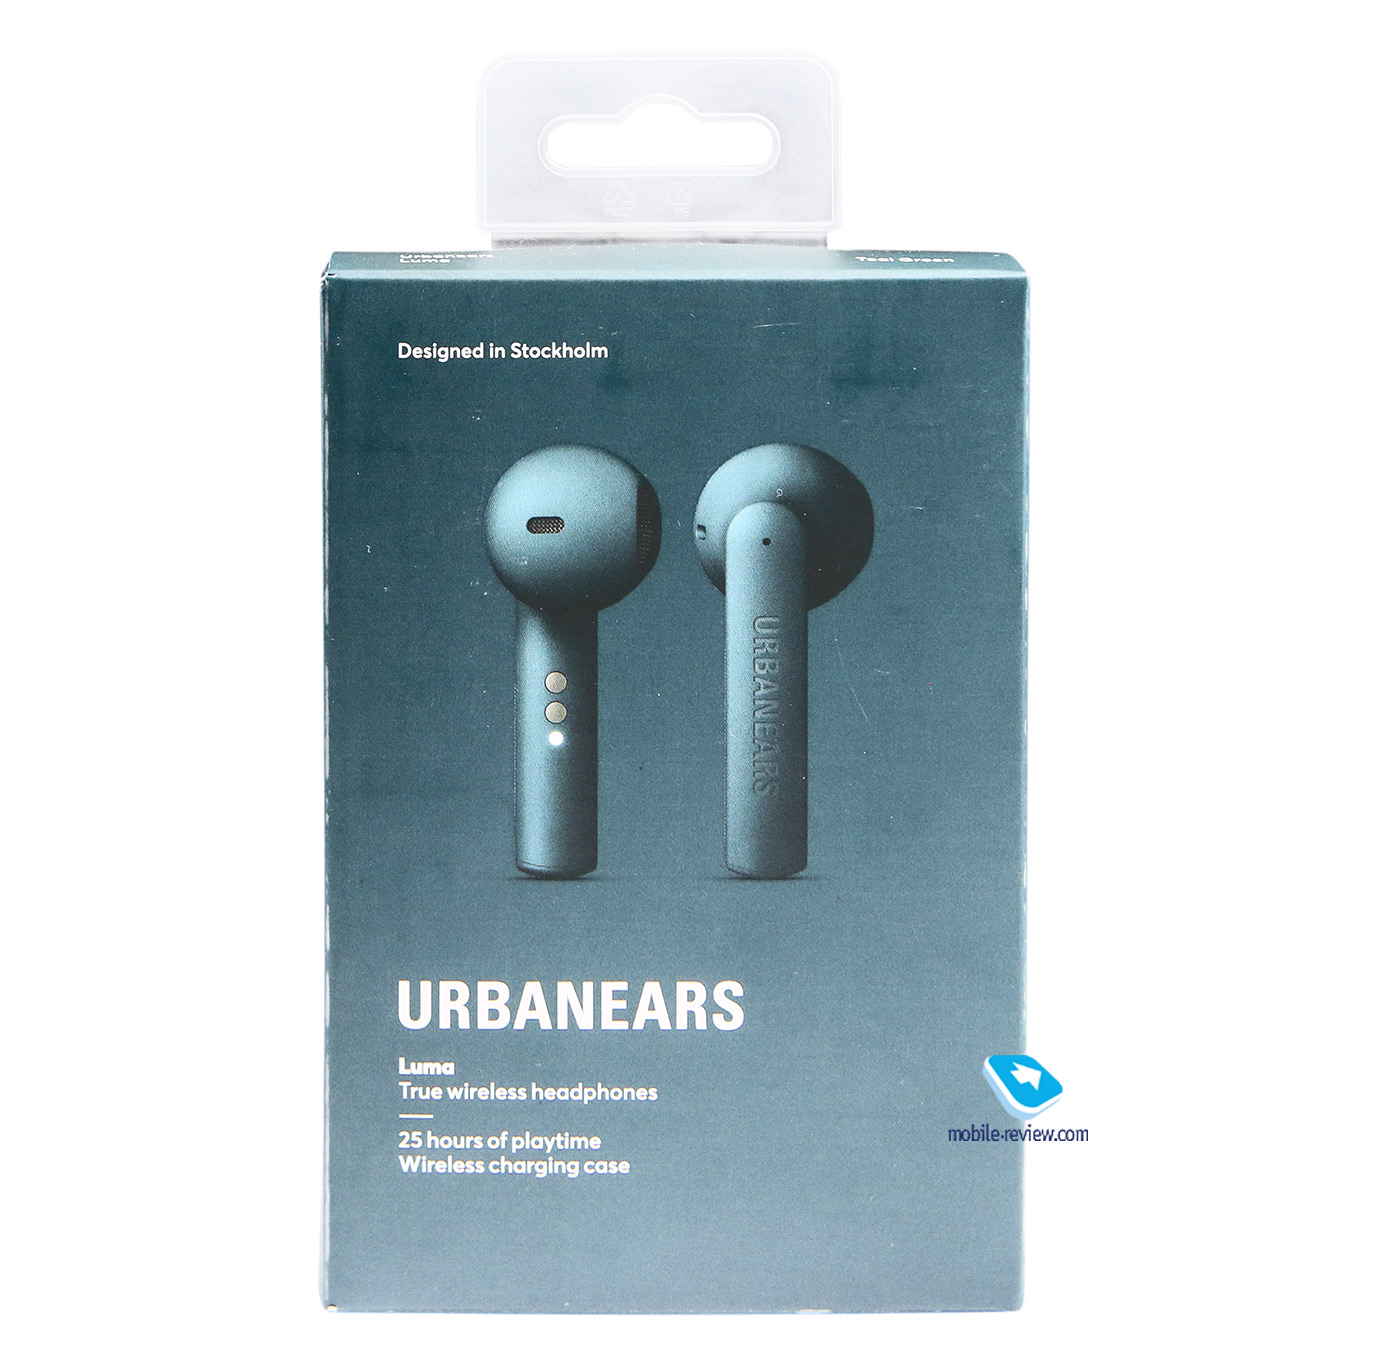 Urbanears Luma stylish and youthful TWS headphones